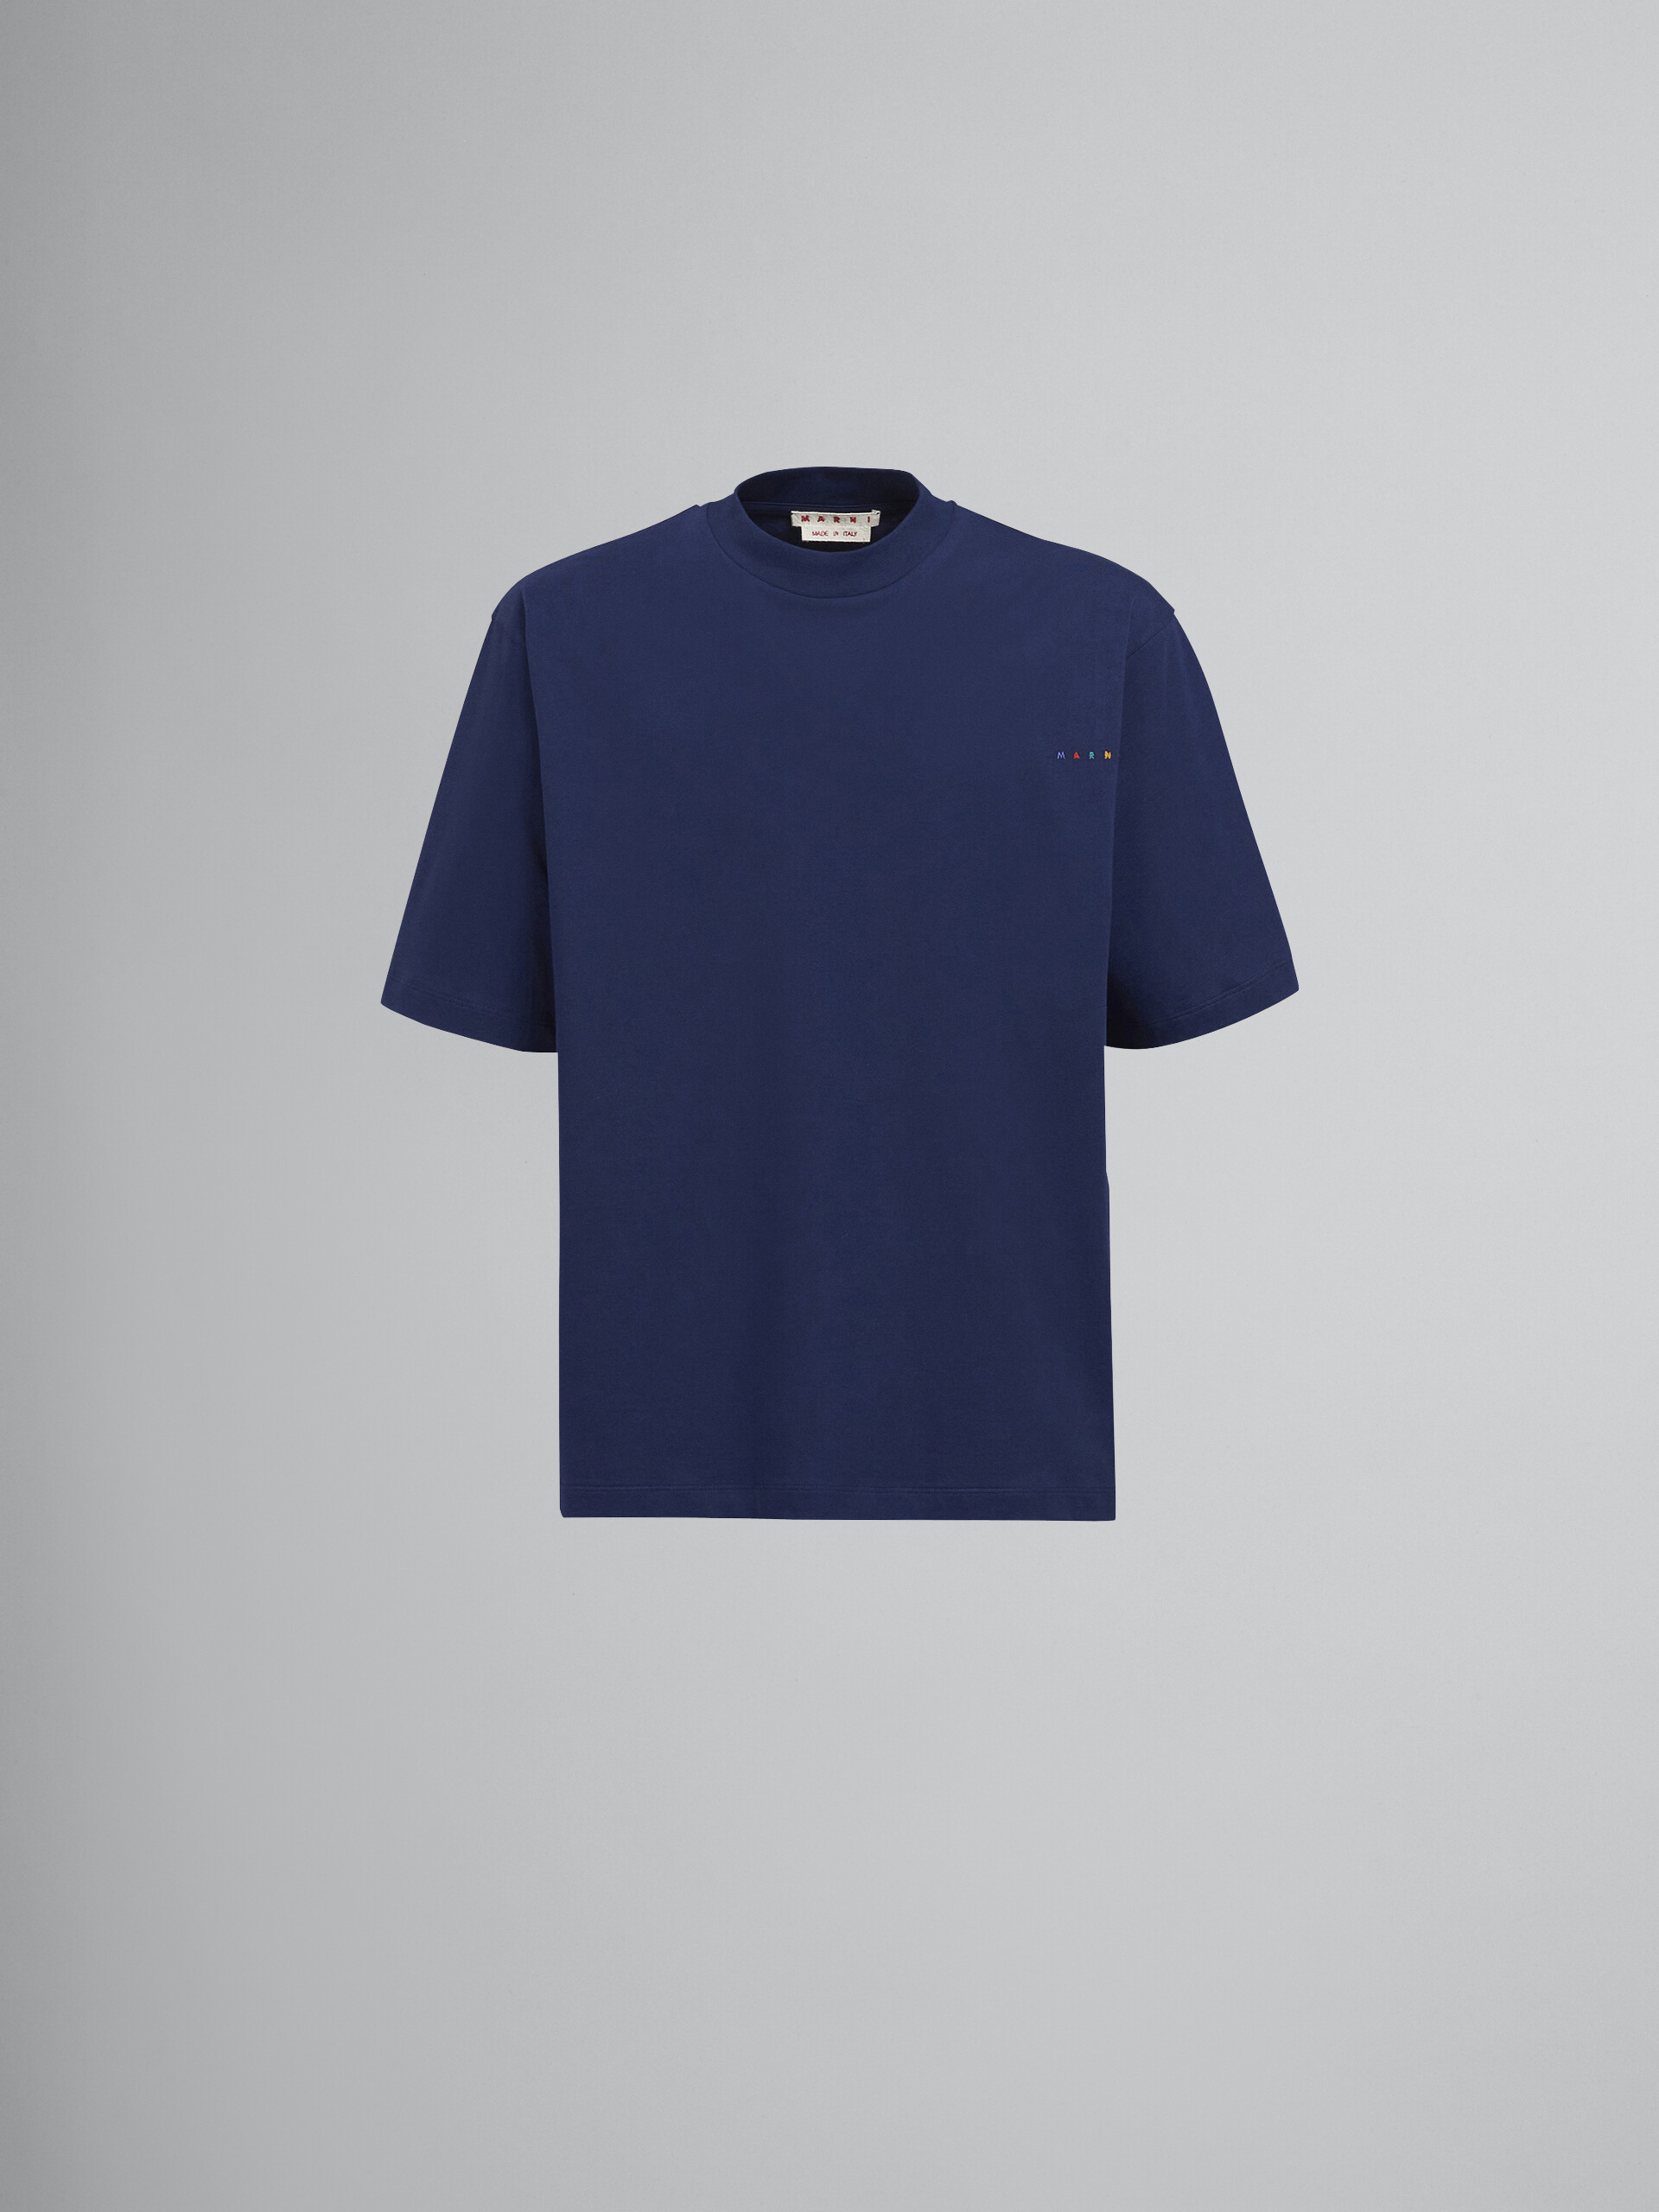 T-shirt in jersey stampa Still Nature blu - T-shirt - Image 1